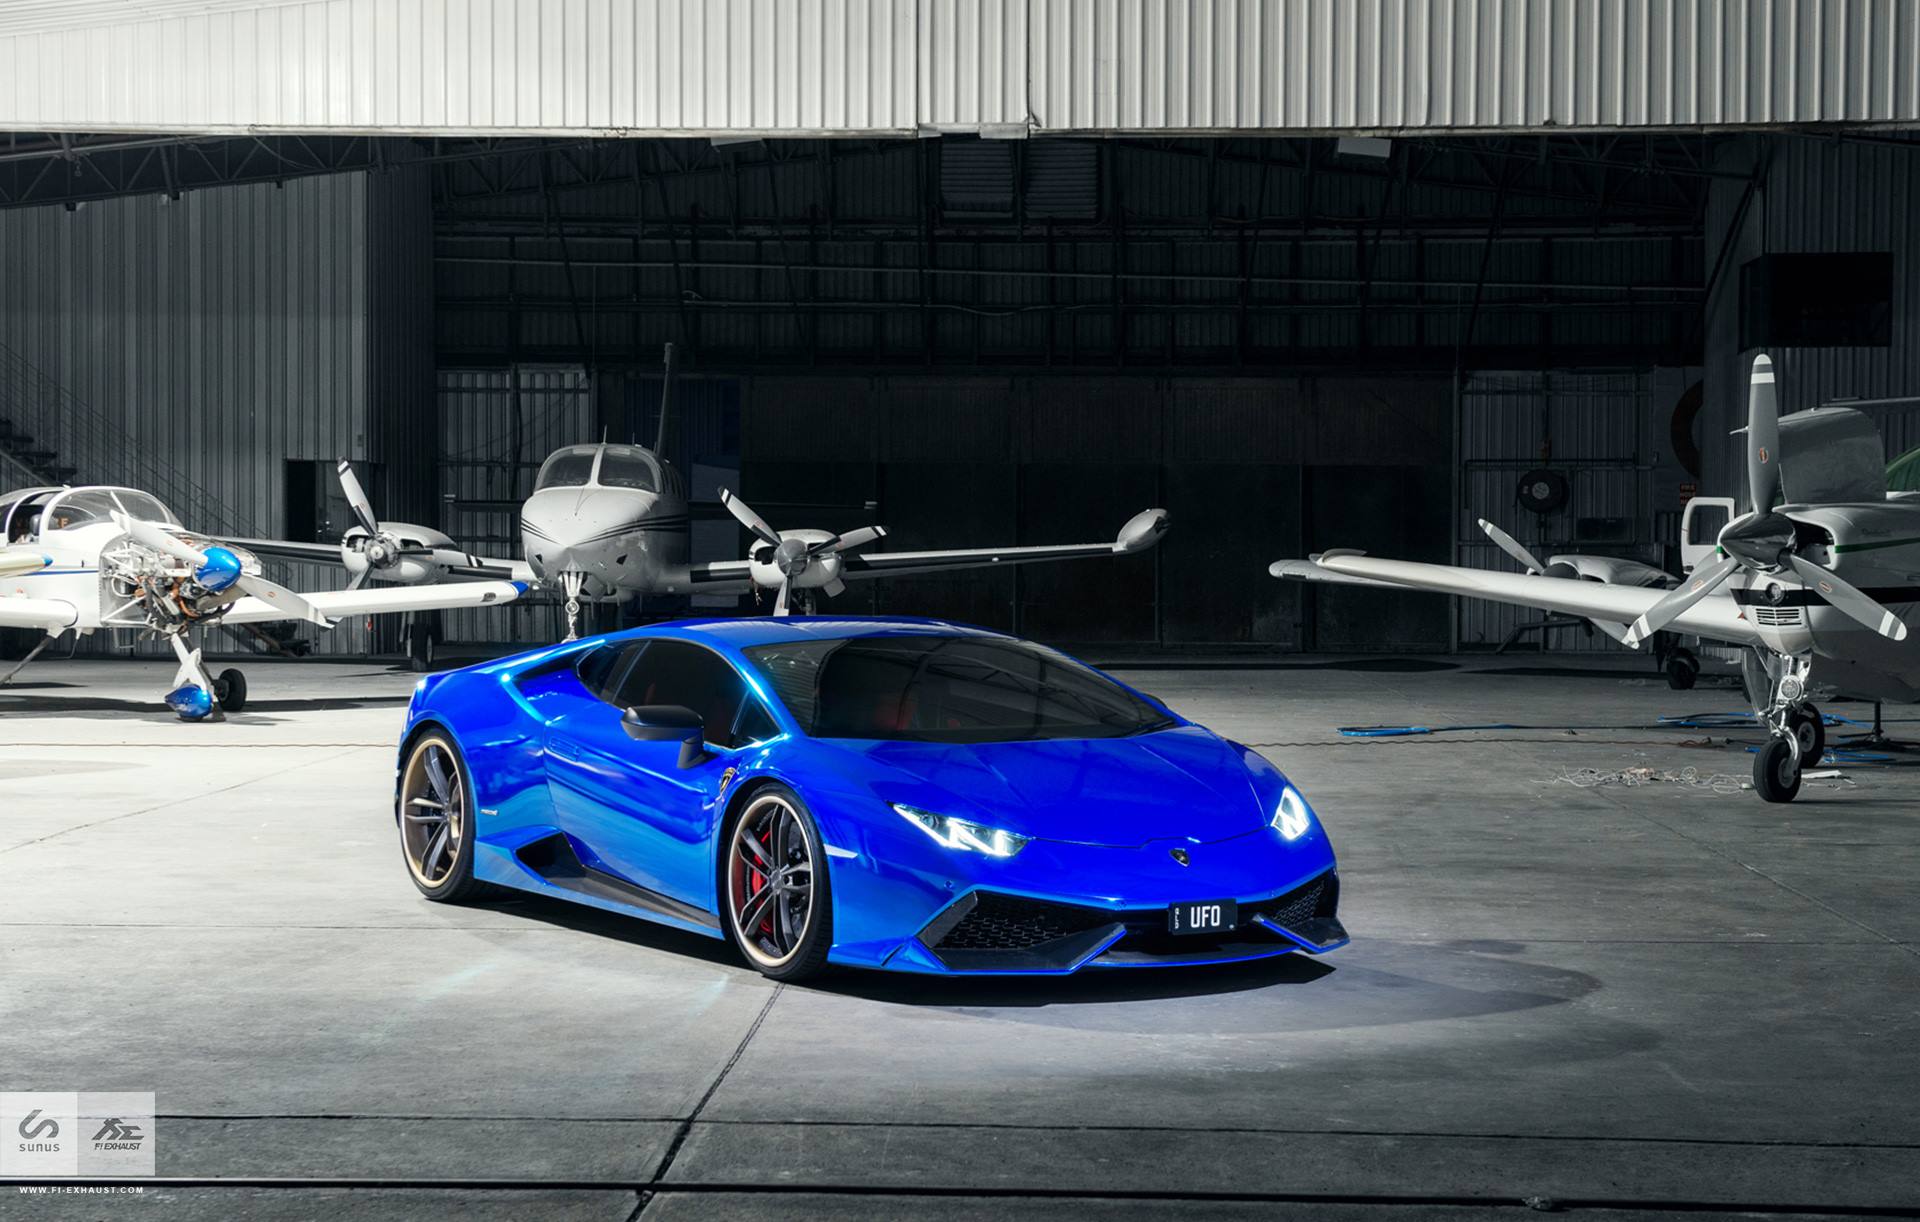 Потрясающий синий хромированный Lamborghini Huracan от Sinus Motorsport